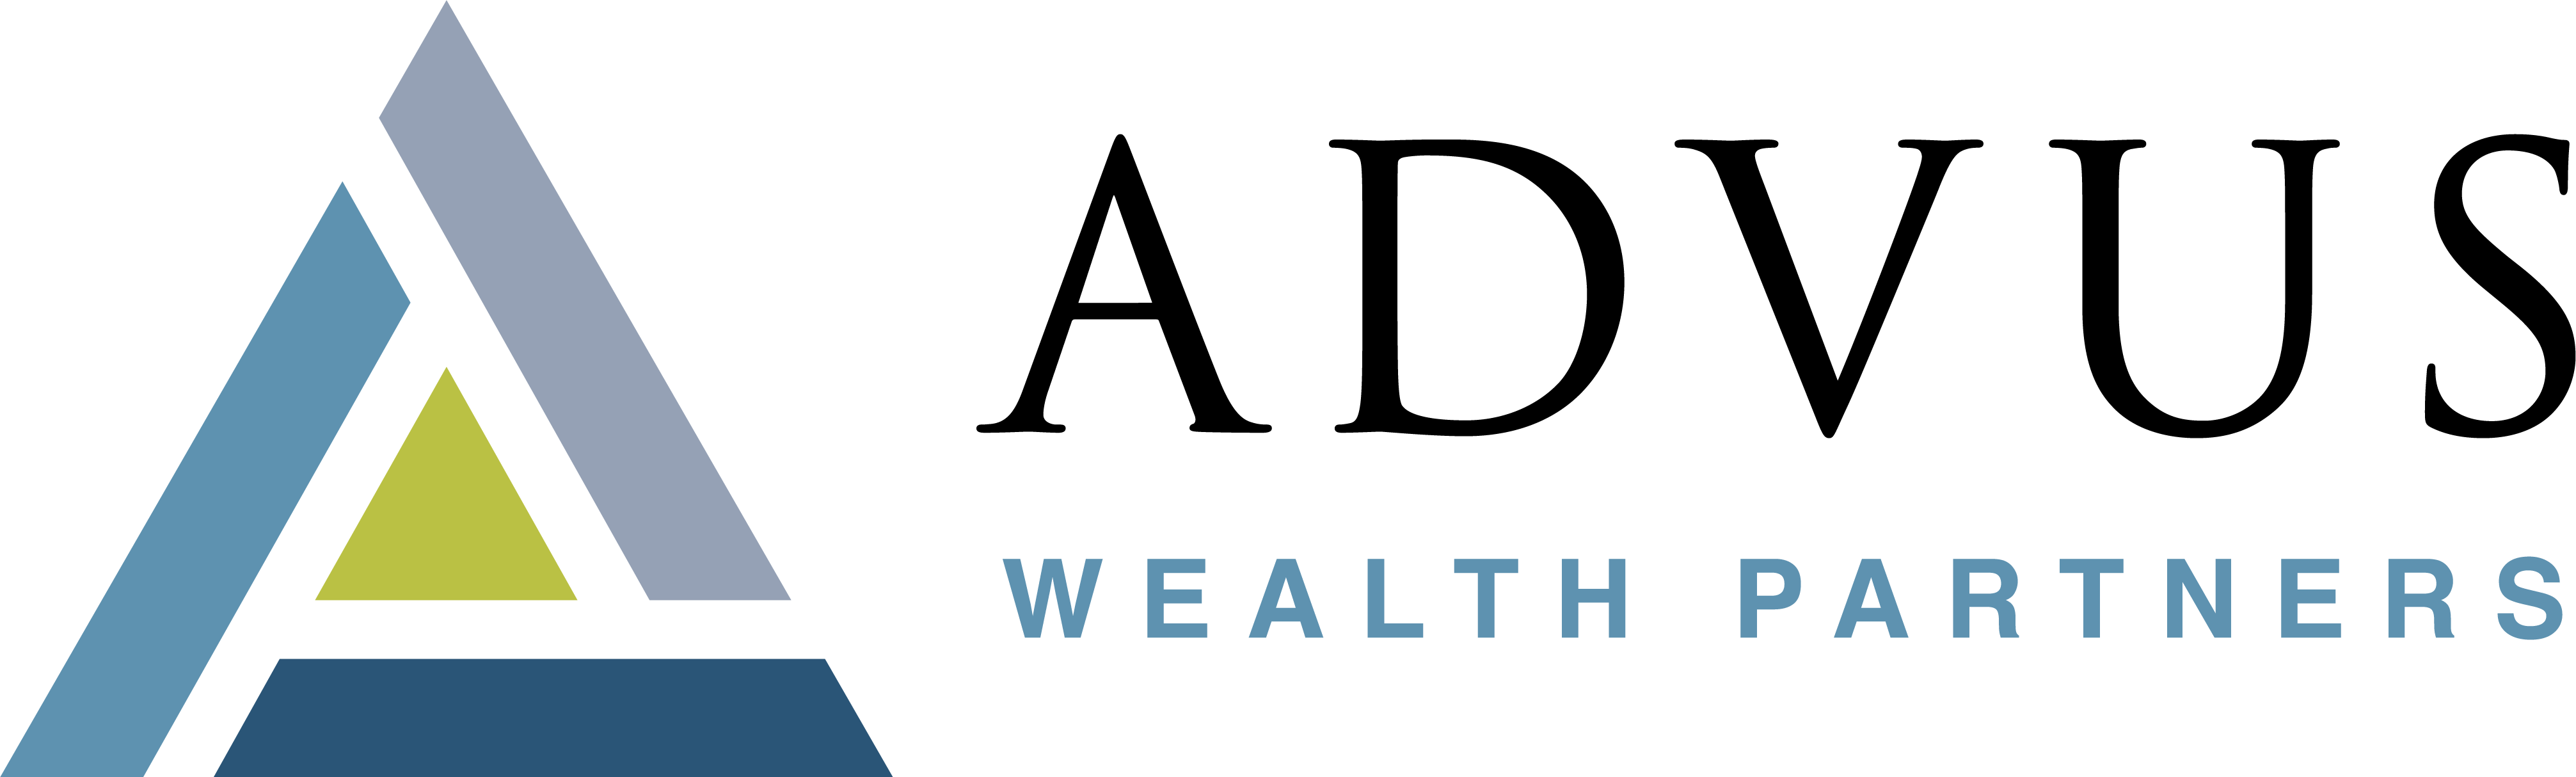 Advus wealth partners logo